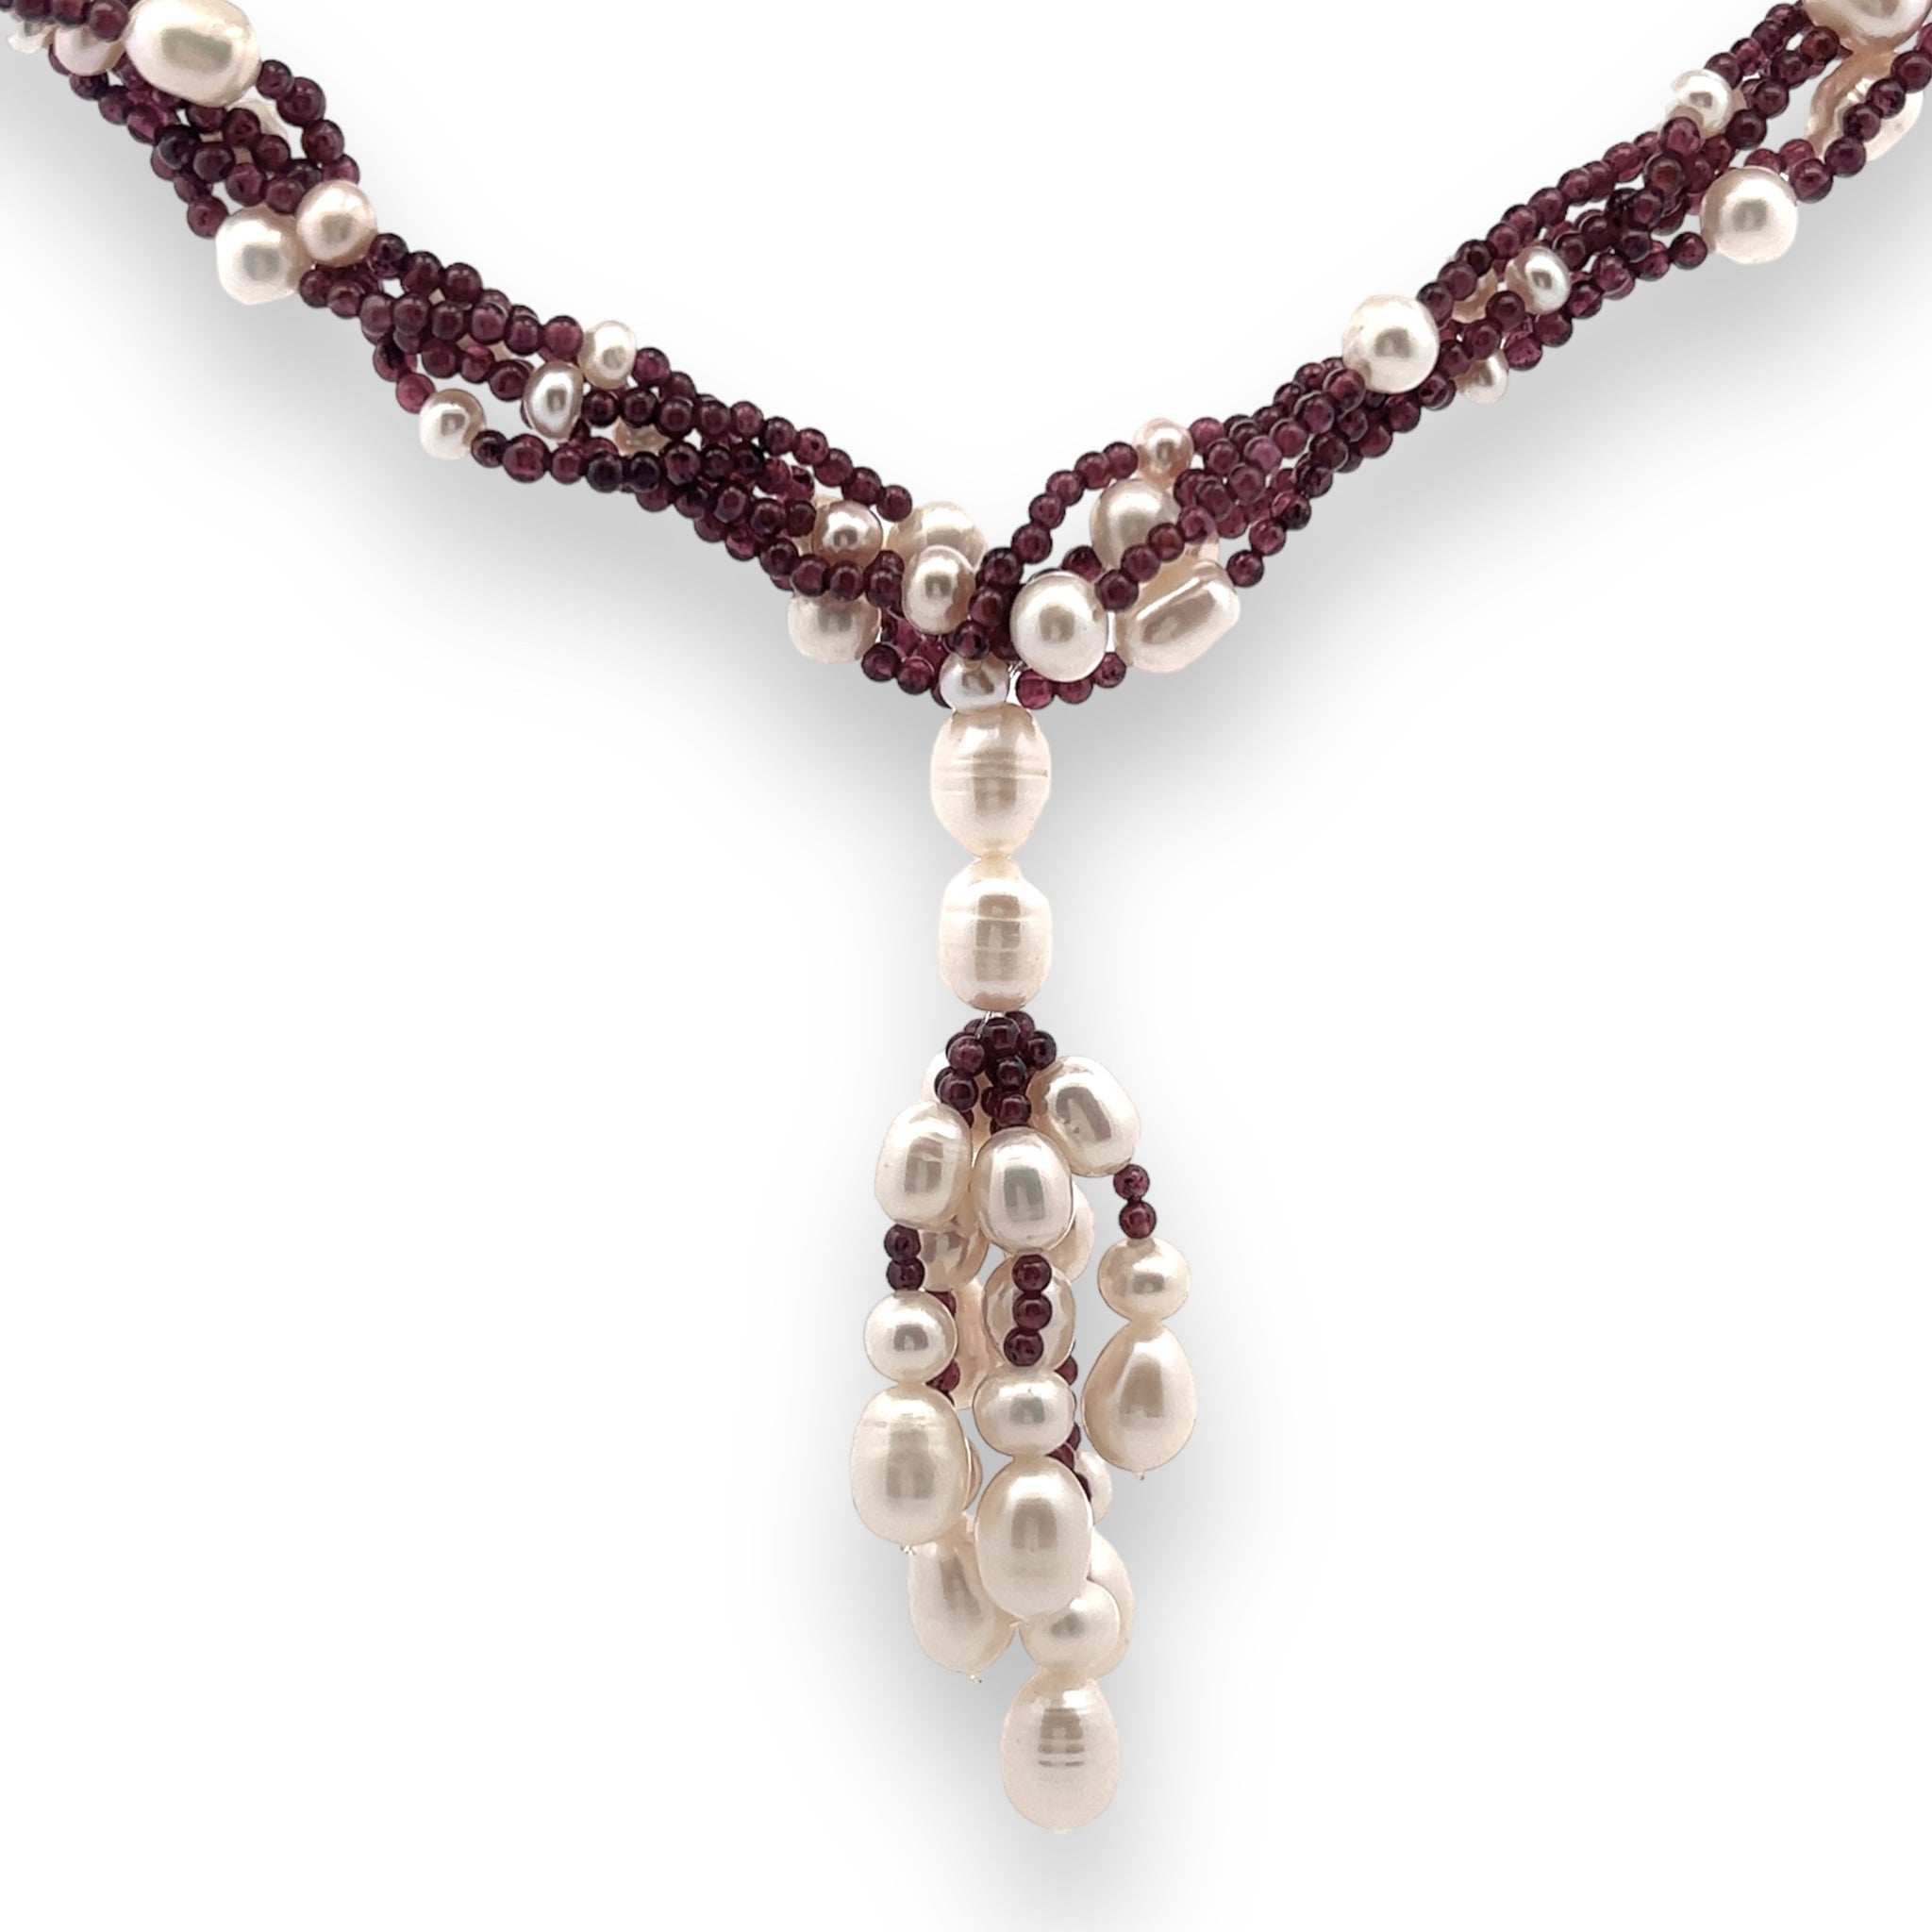 Natural Handmade Necklace Garnet Pearls 16-18" Gemstone Beads Jewellery